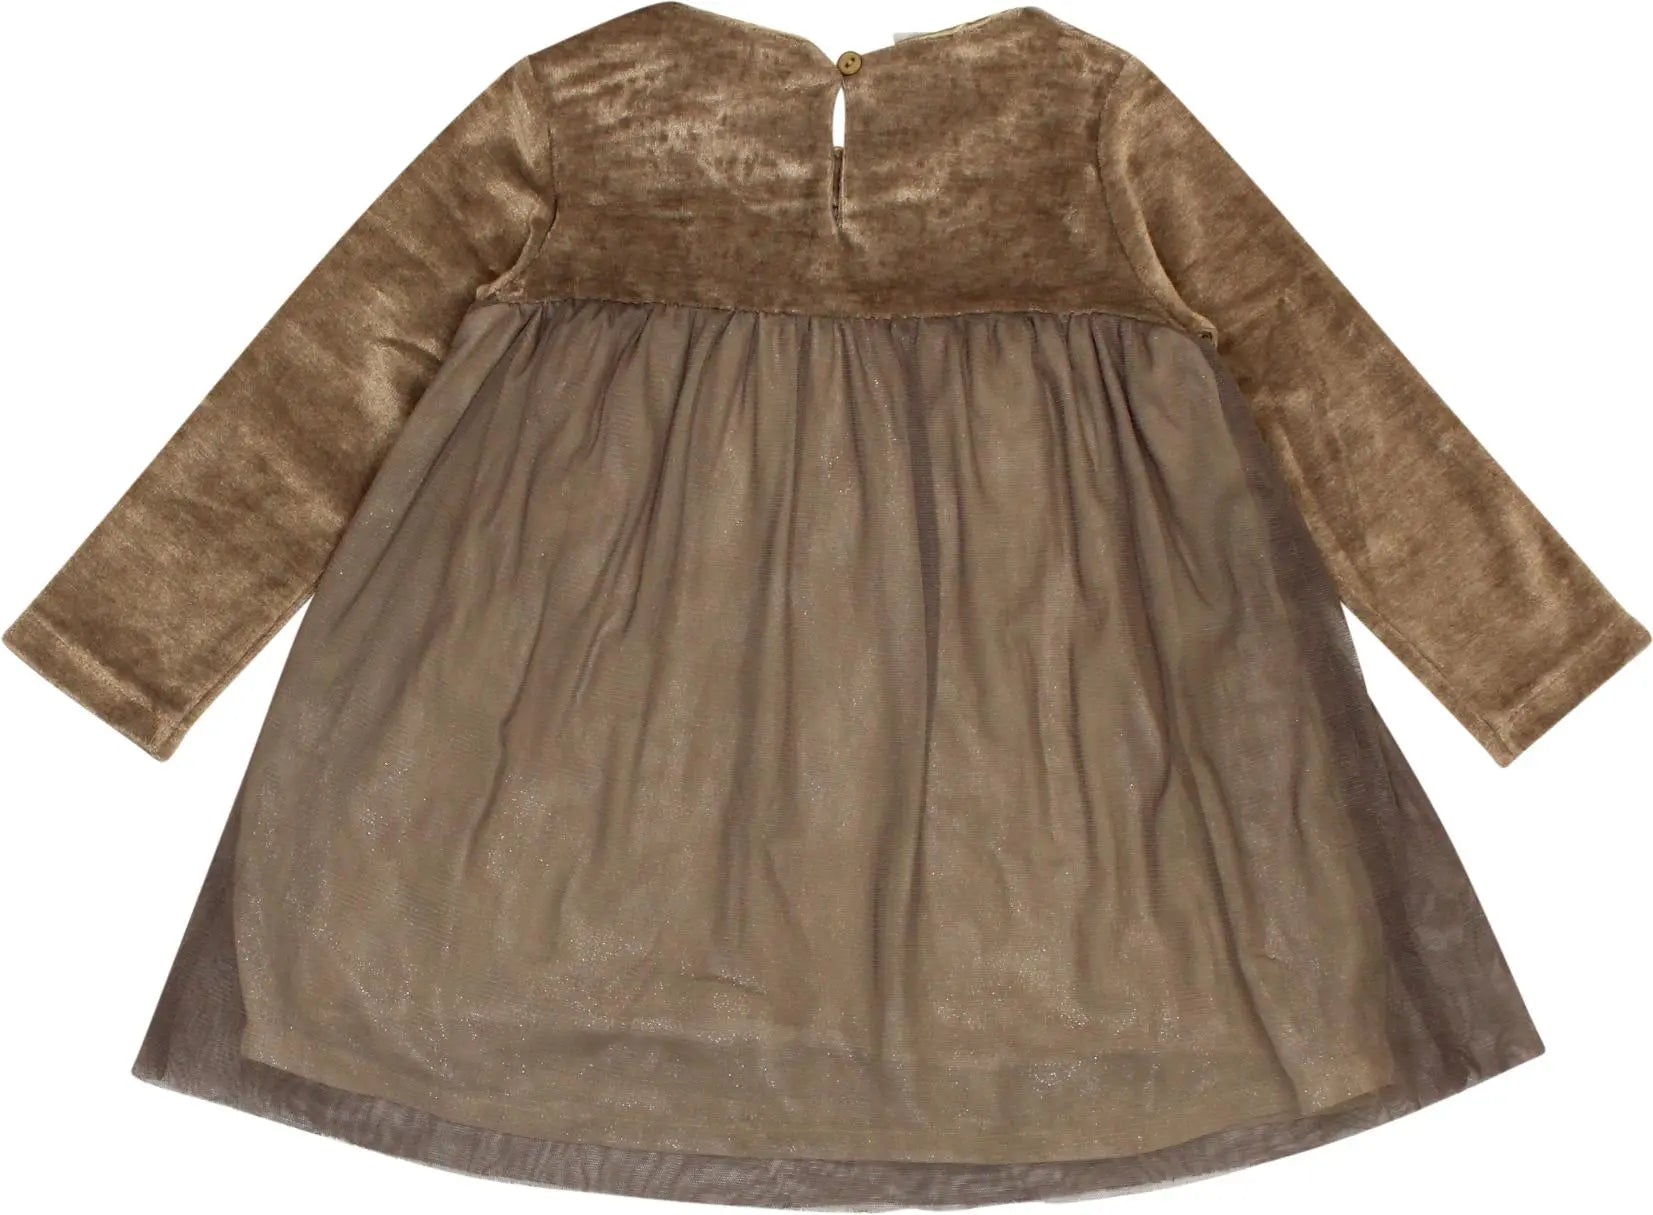 Zara - Velvet Dress- ThriftTale.com - Vintage and second handclothing